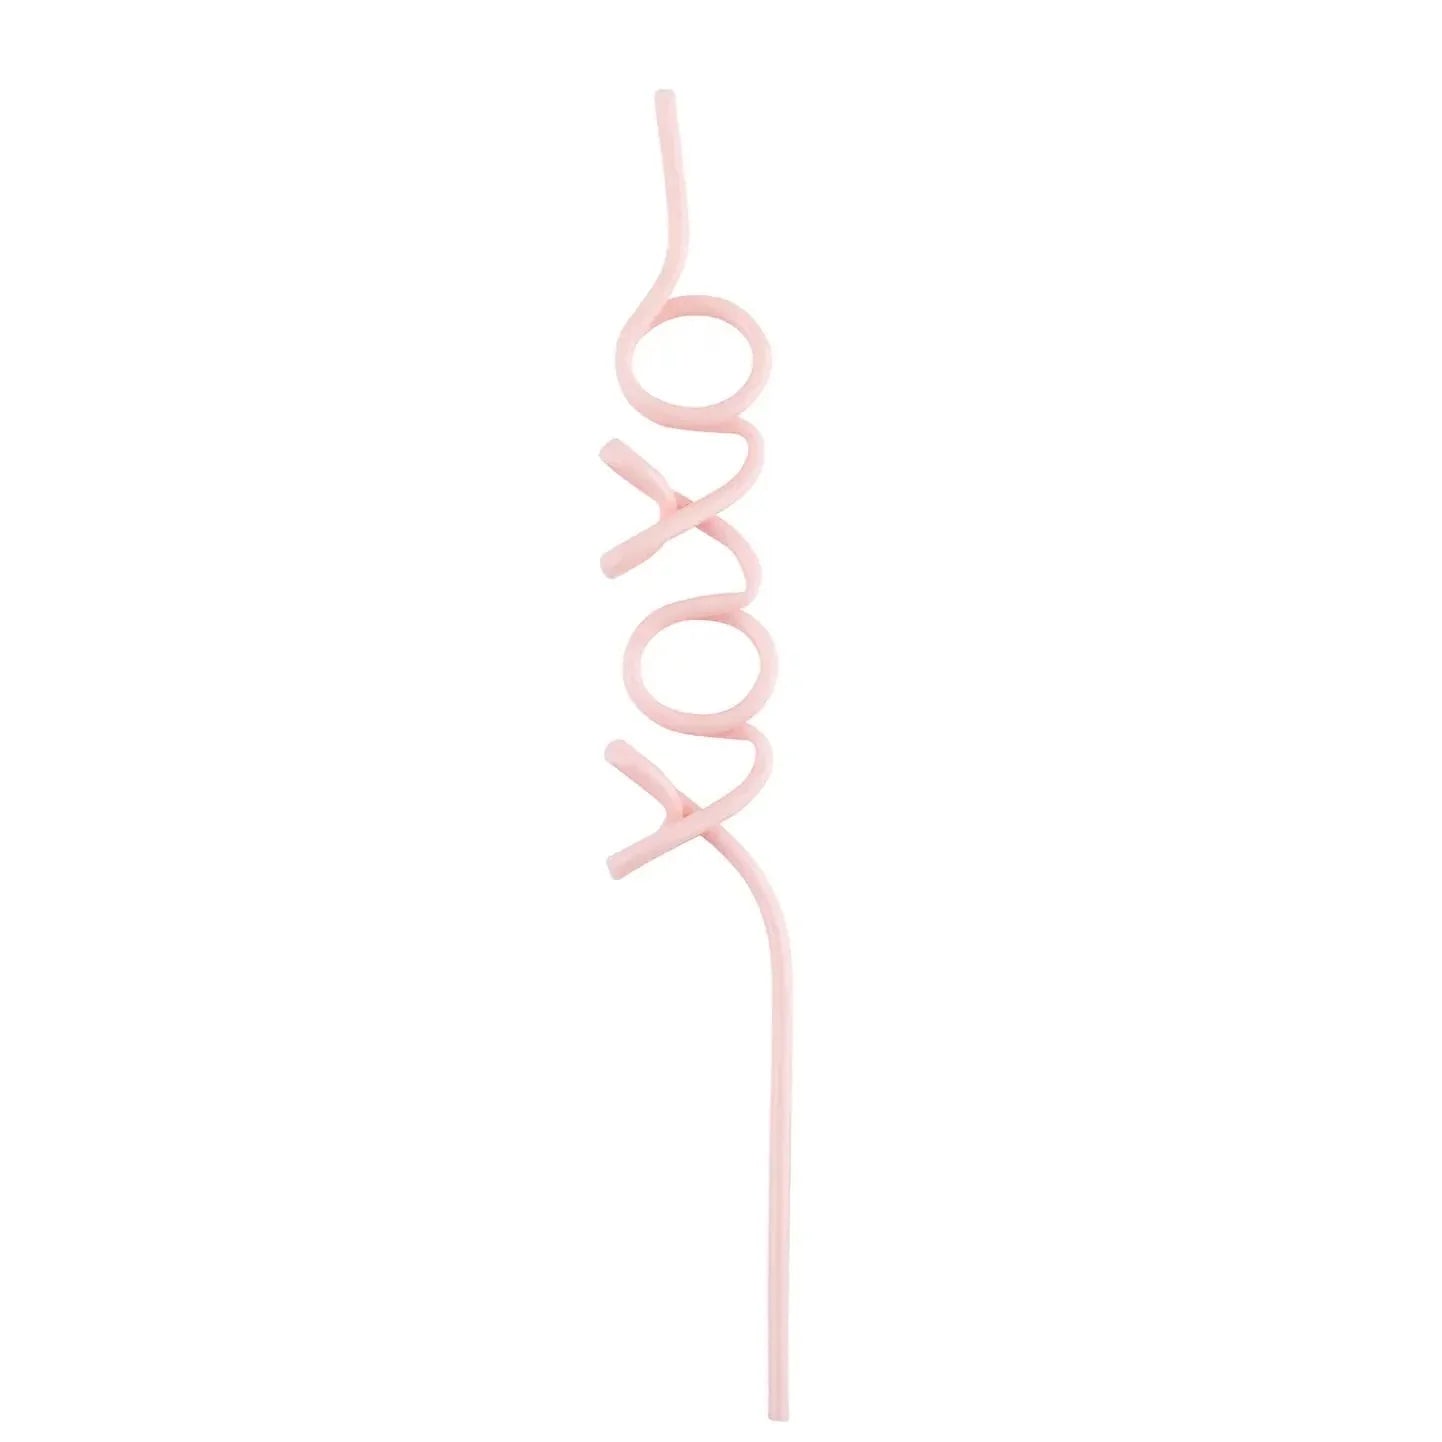 Pink &quot;xoxo&quot; straw on white bakcground.